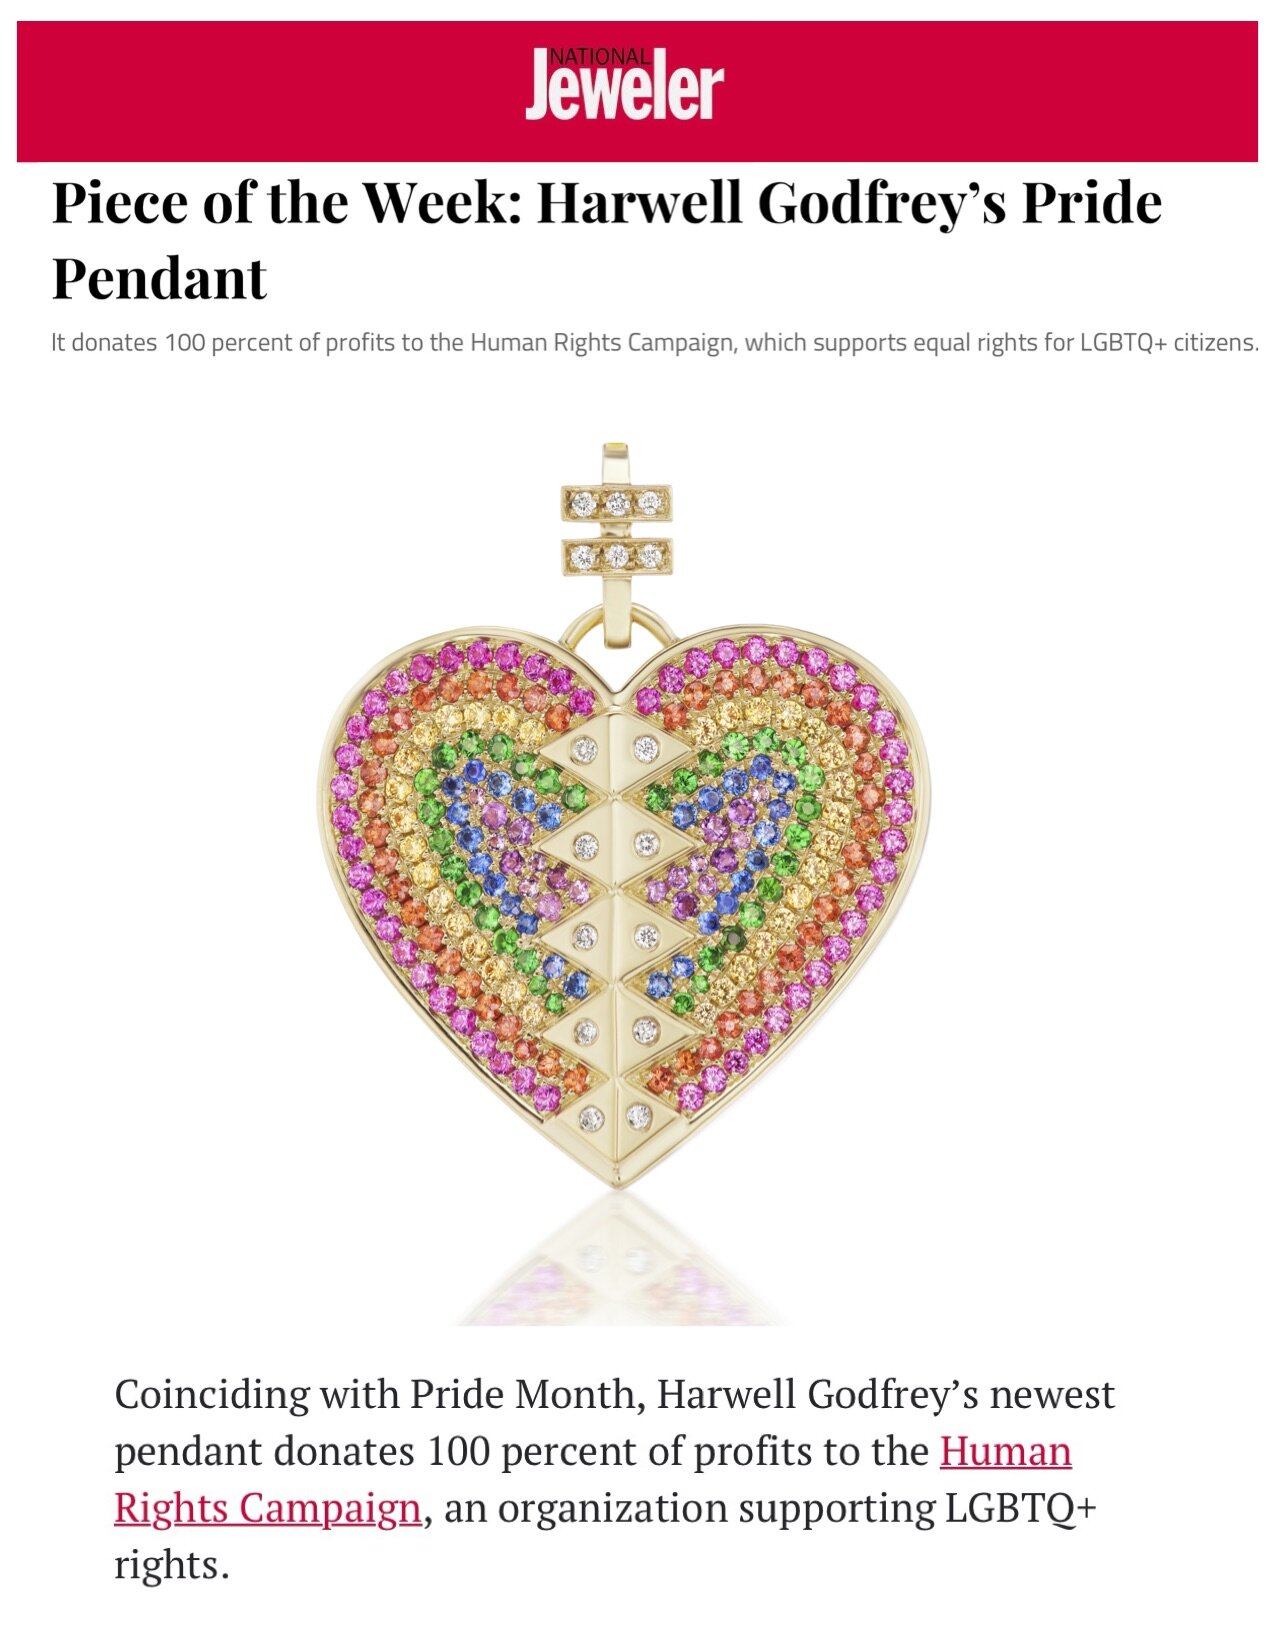 Harwell Godfrey on National Jeweler.com, June 2021